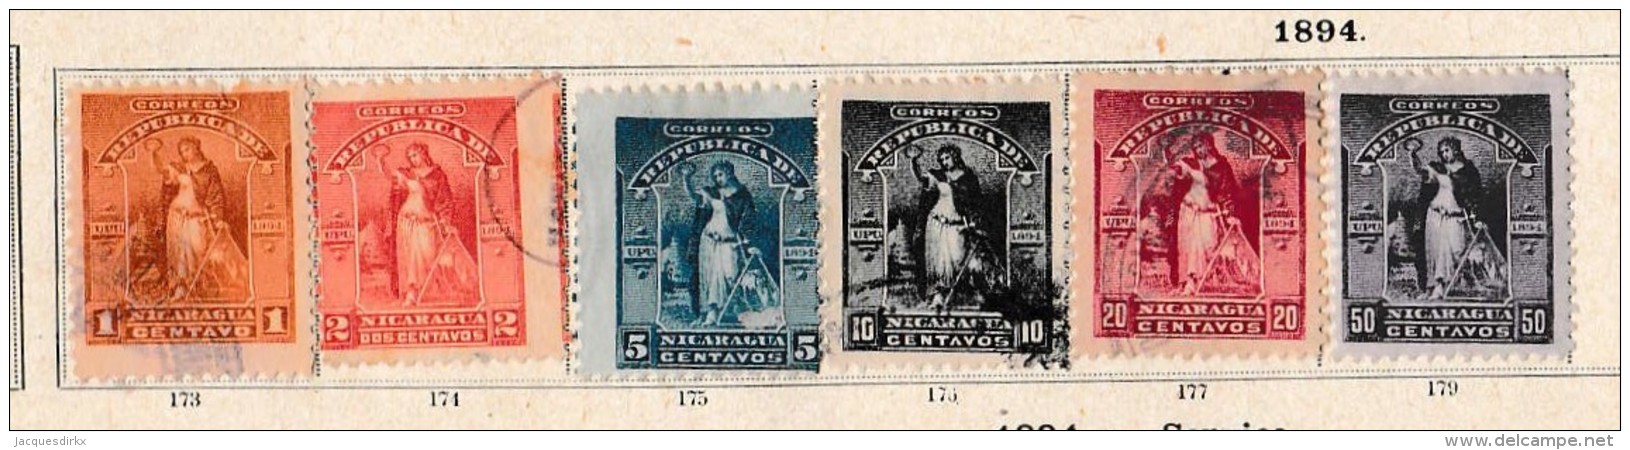 Nicaragua     .            Pagina Met Zegels       .          /           .    Page With Stamps - Nicaragua